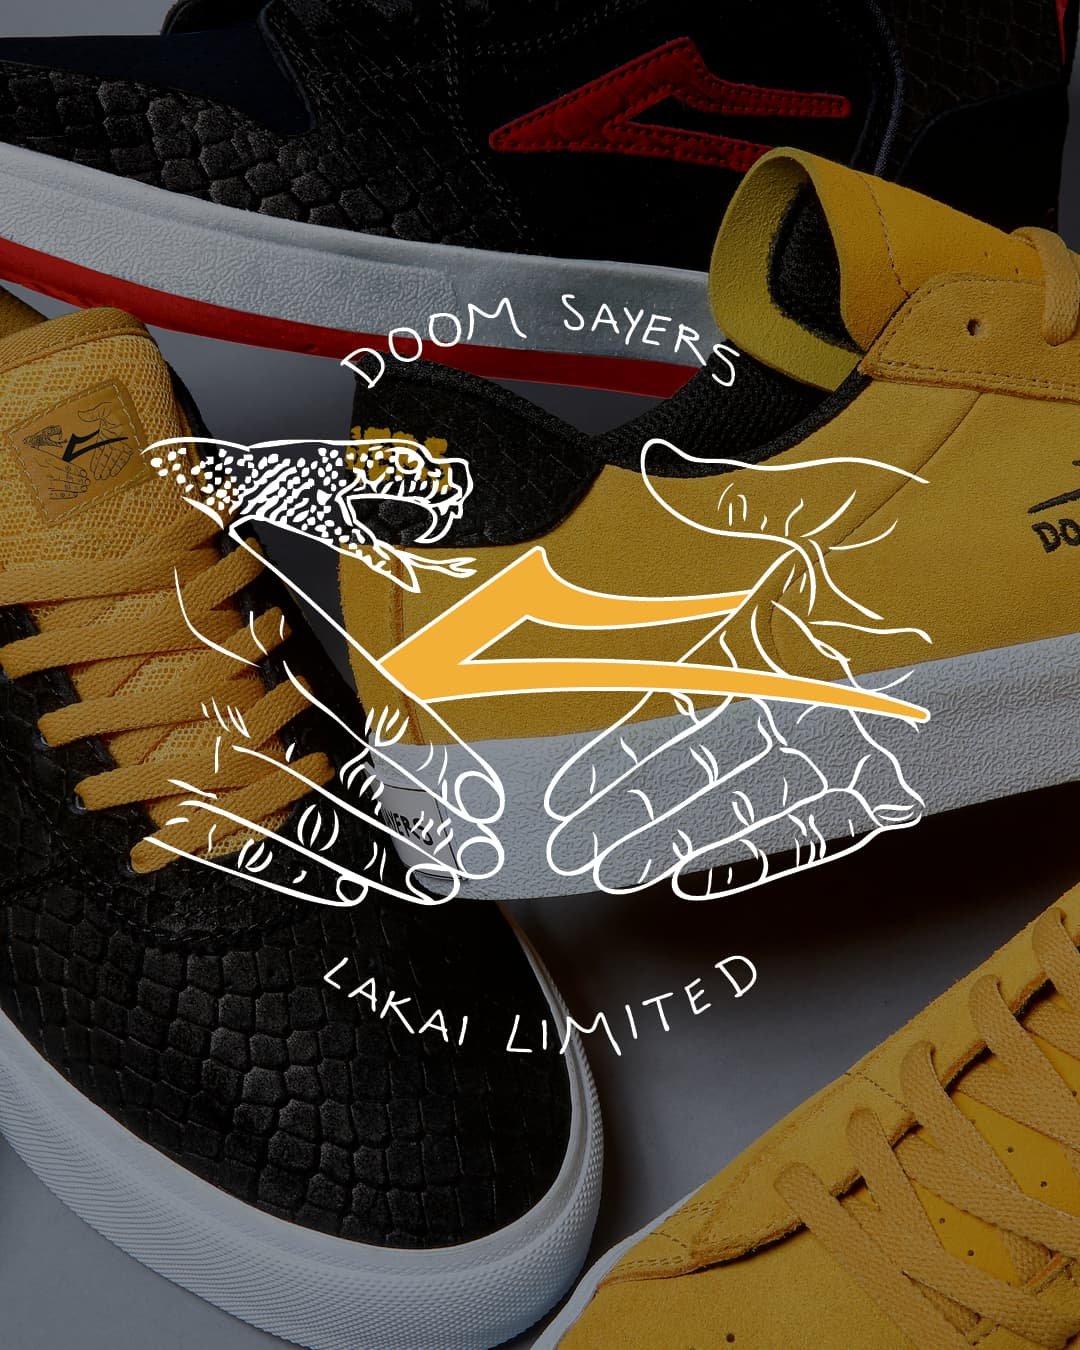 Lakai Limited Footwear: Lakai x Doomsayers Collaboration Release